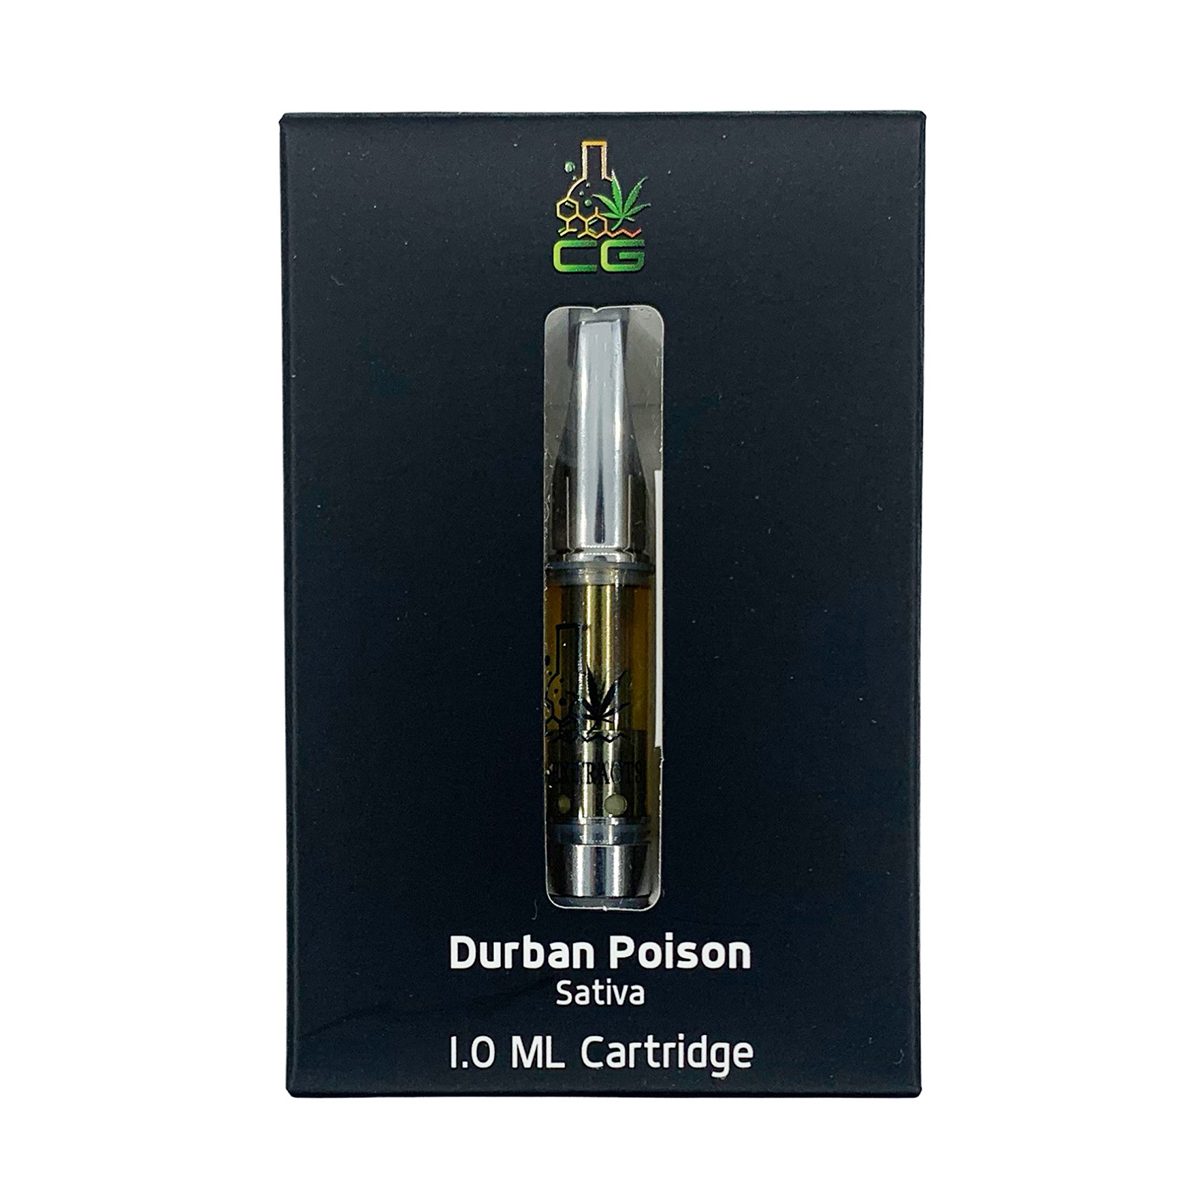 Durban-Poison-Sativa-1ml-Cartridge-By-CG-Extract